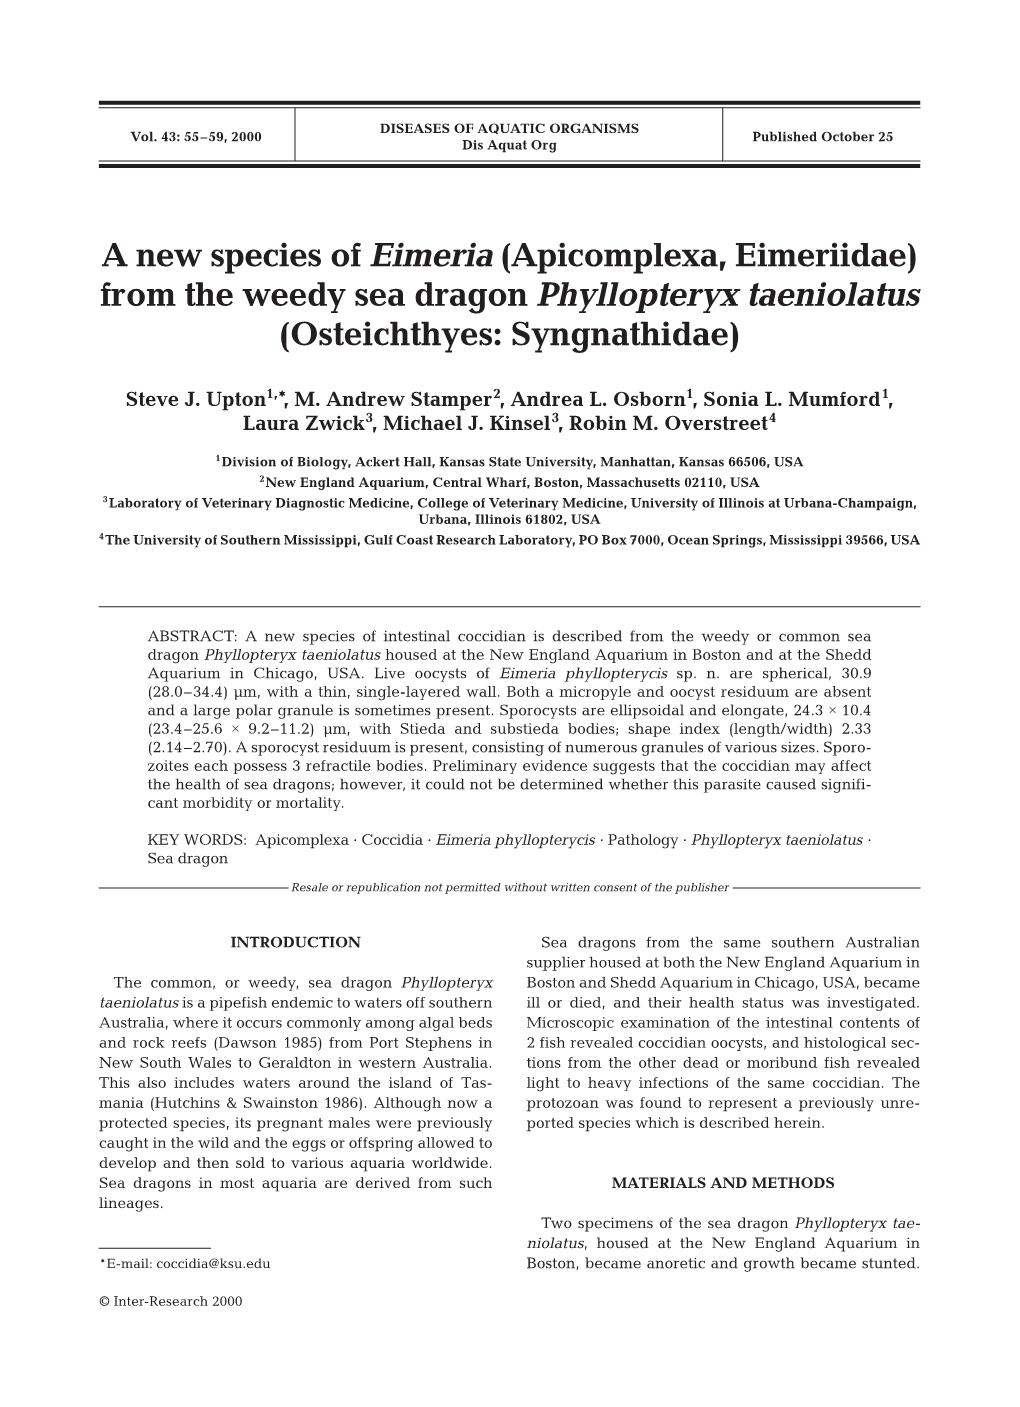 A New Species of Eimeria (Apicomplexa, Eimeriidae) from the Weedy Sea Dragon Phyllopteryx Taeniolatus (Osteichthyes: Syngnathidae)